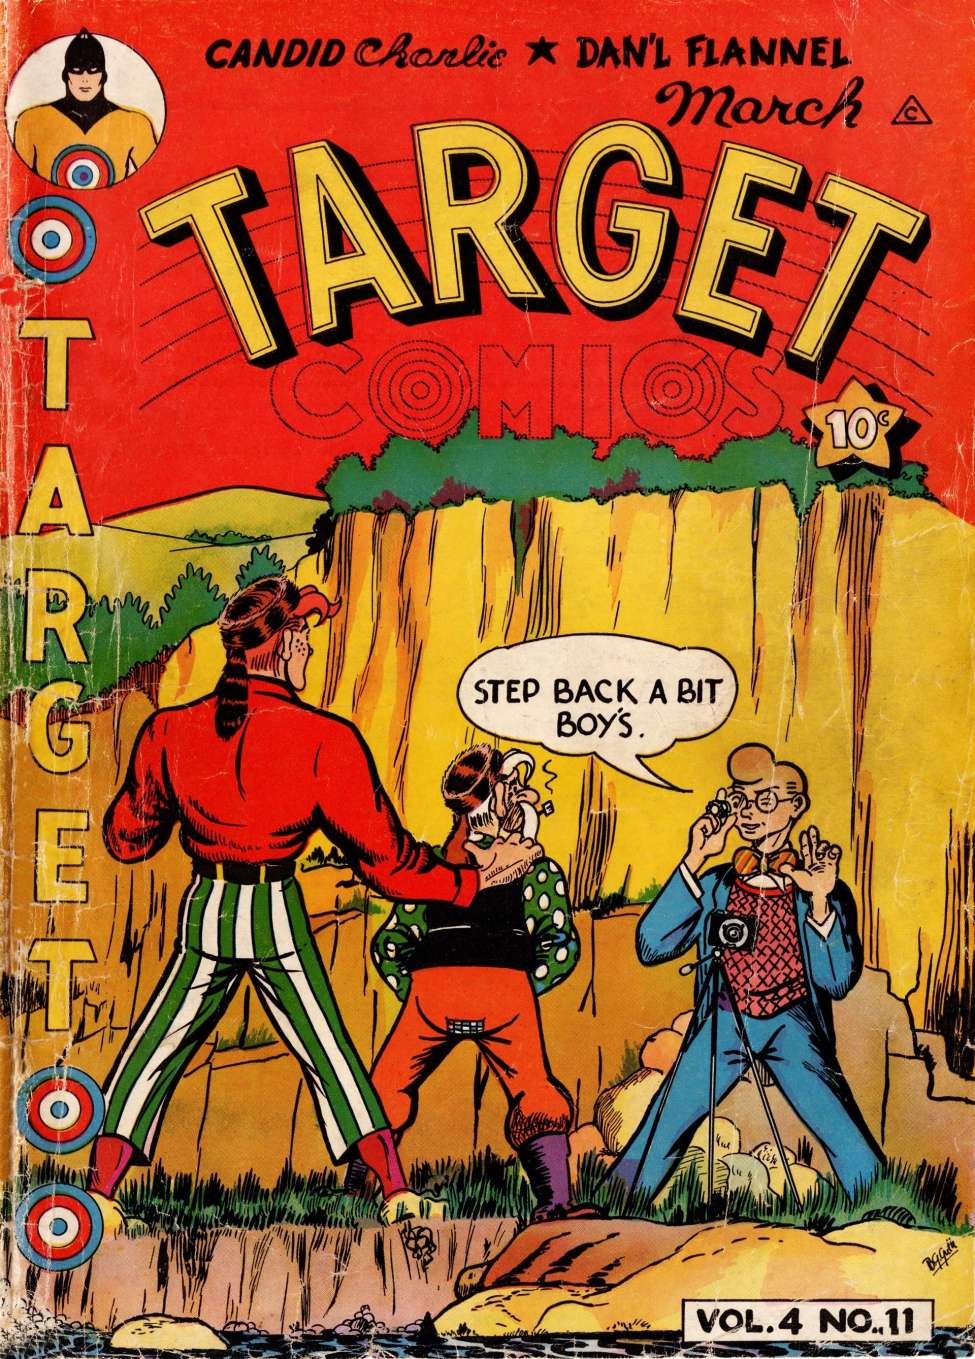 Comic Book Cover For Target Comics v4 11 - Version 2